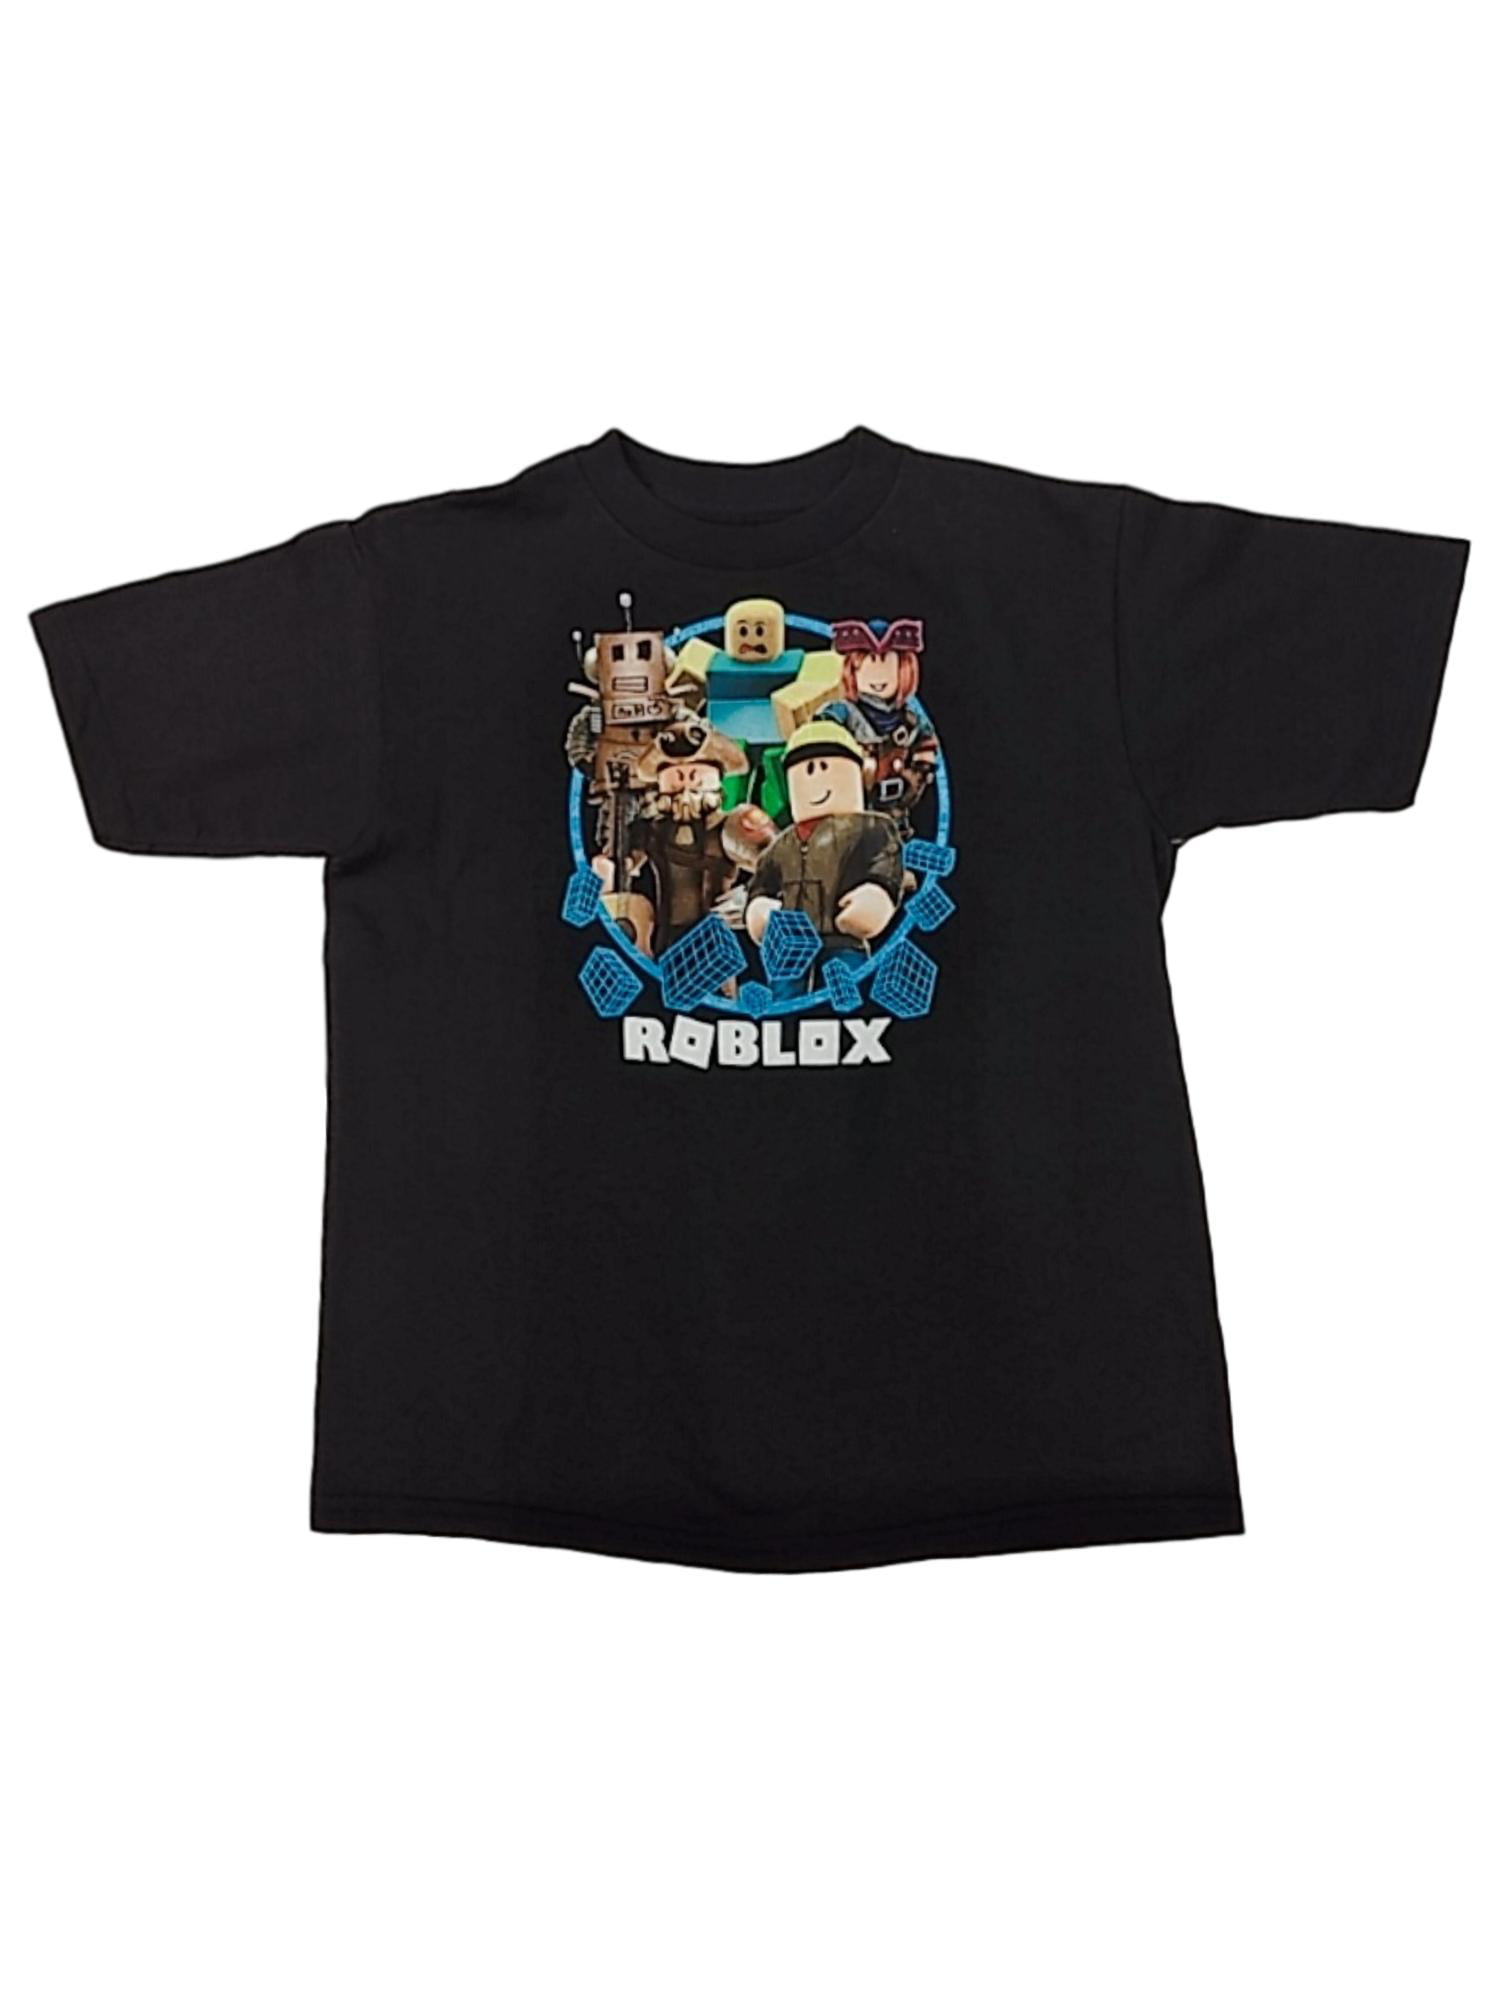 Boys Black Roblox Multi Character T Shirt Graphic Tee Shirt Large 6 7 Walmart Com Walmart Com - roblox boys shirts size 6